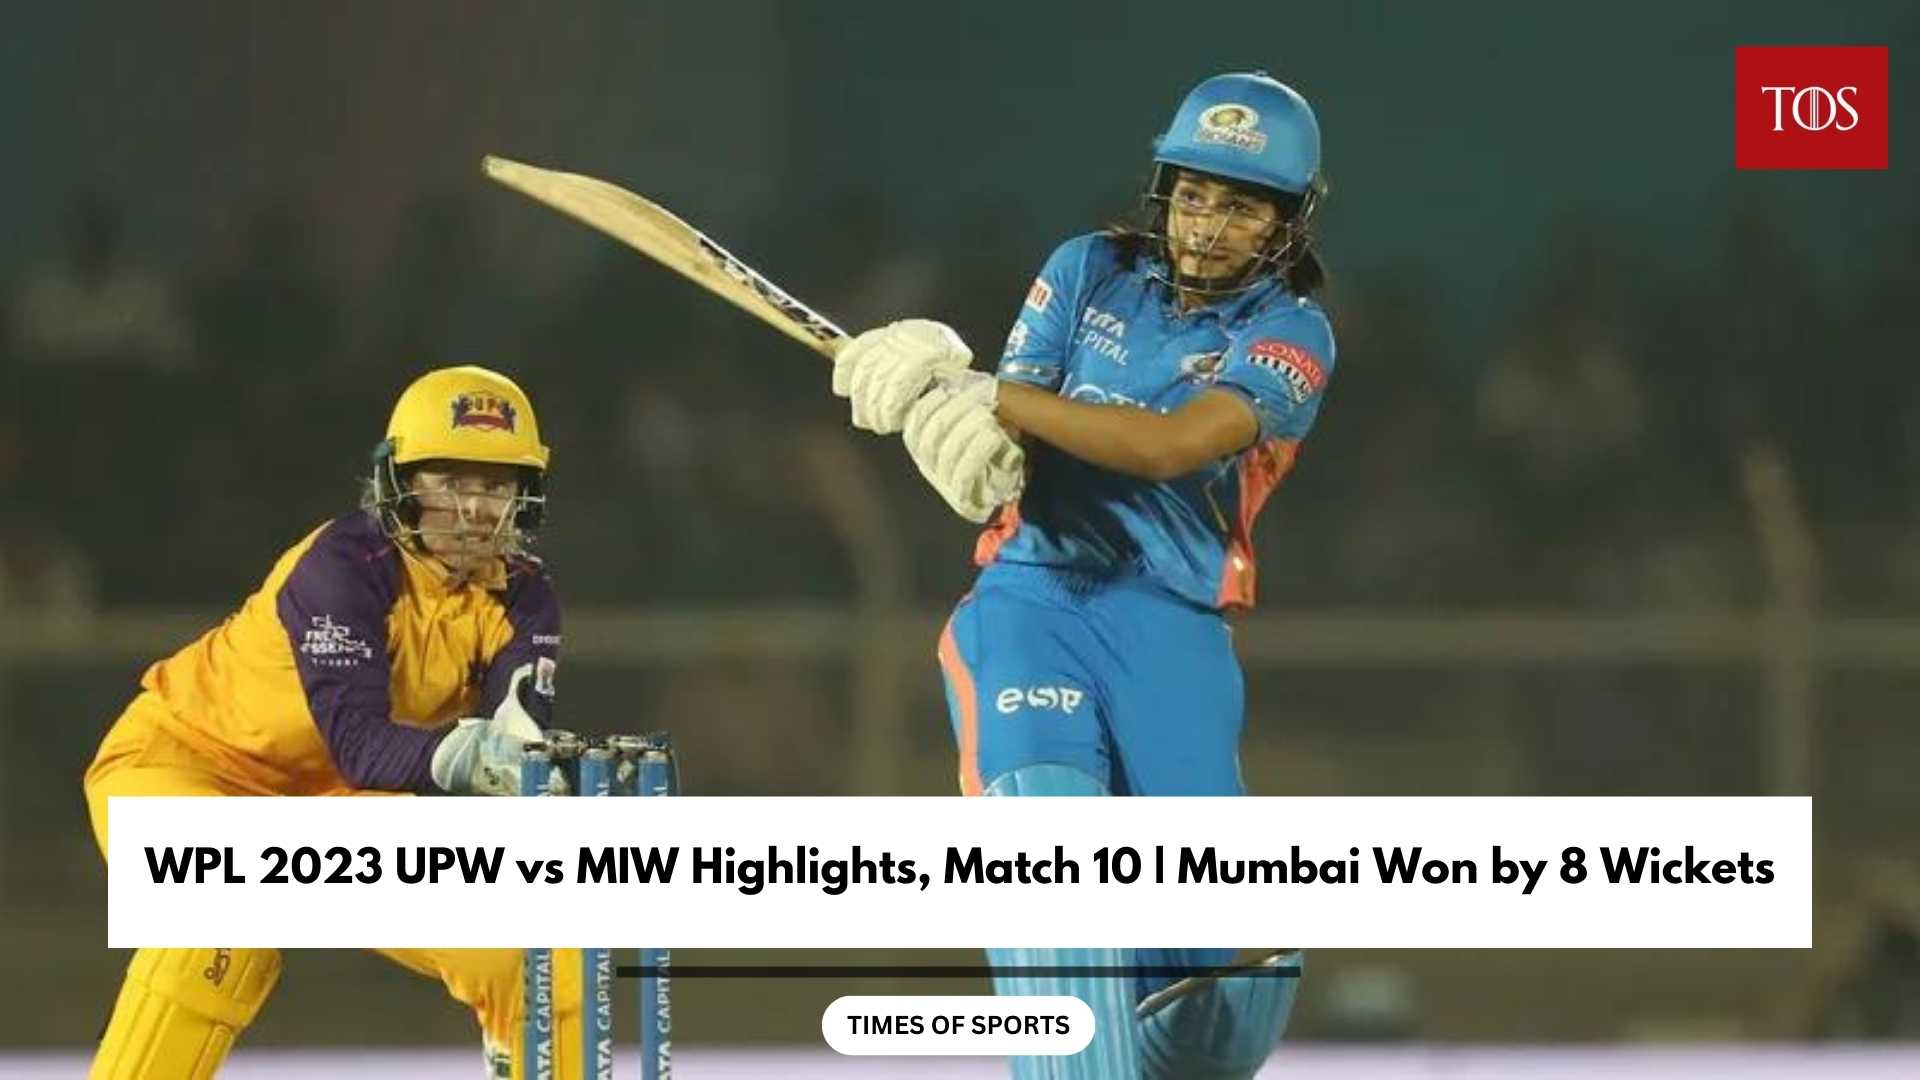 WPL 2023 UPW vs MIW Highlights, Match 10 Mumbai Won by 8 Wickets